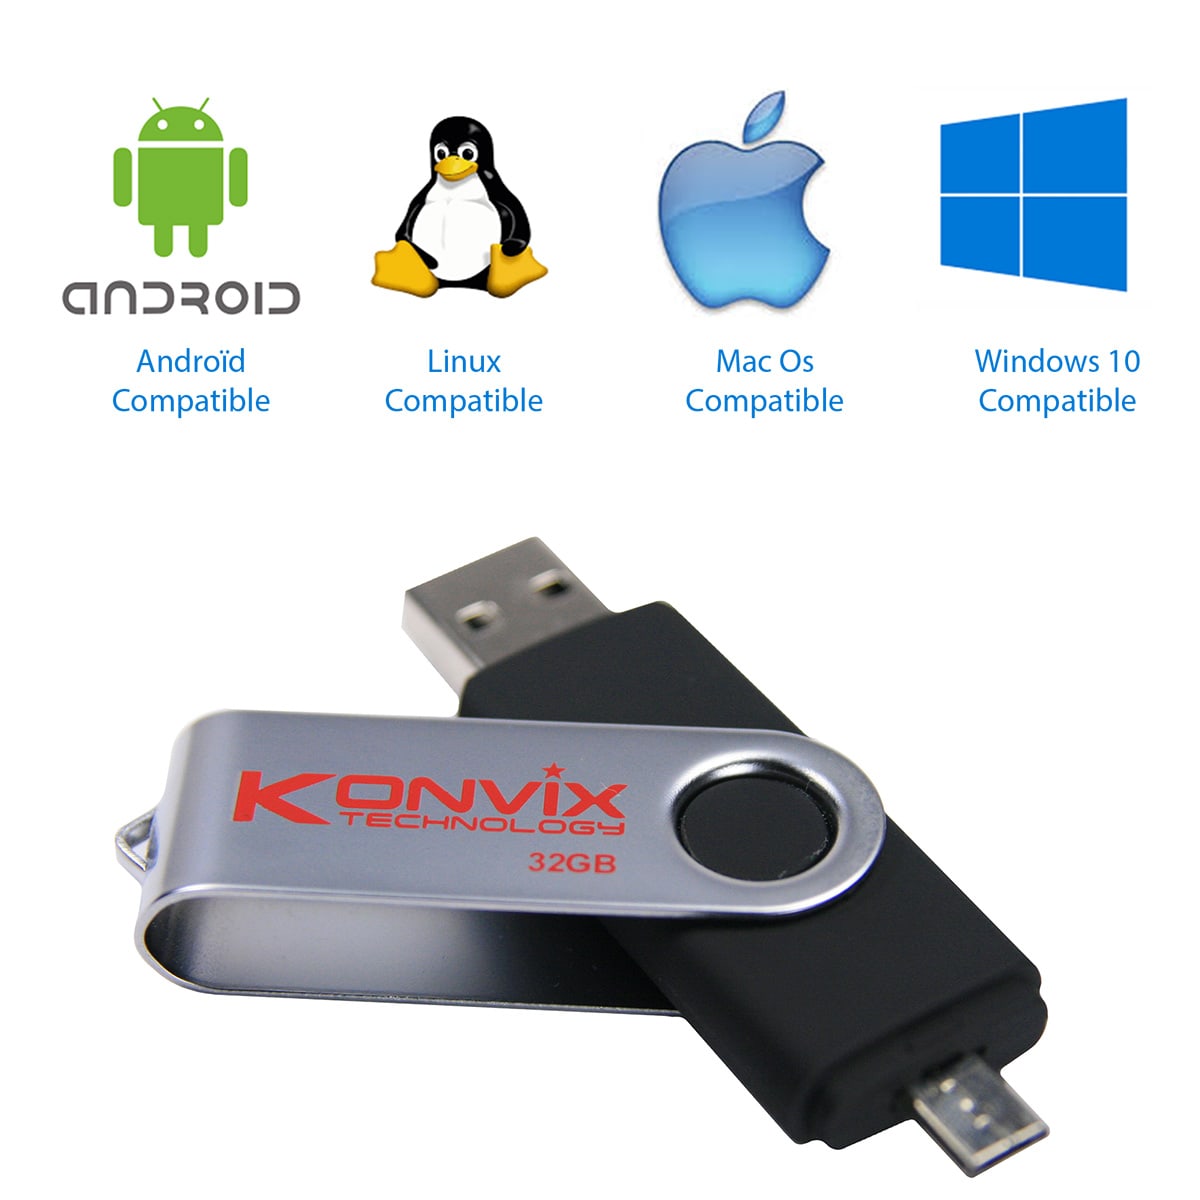 Clé USB OTG DUO-LINK 32GB les appareils Androïd, Windows, Linux, Mac os.